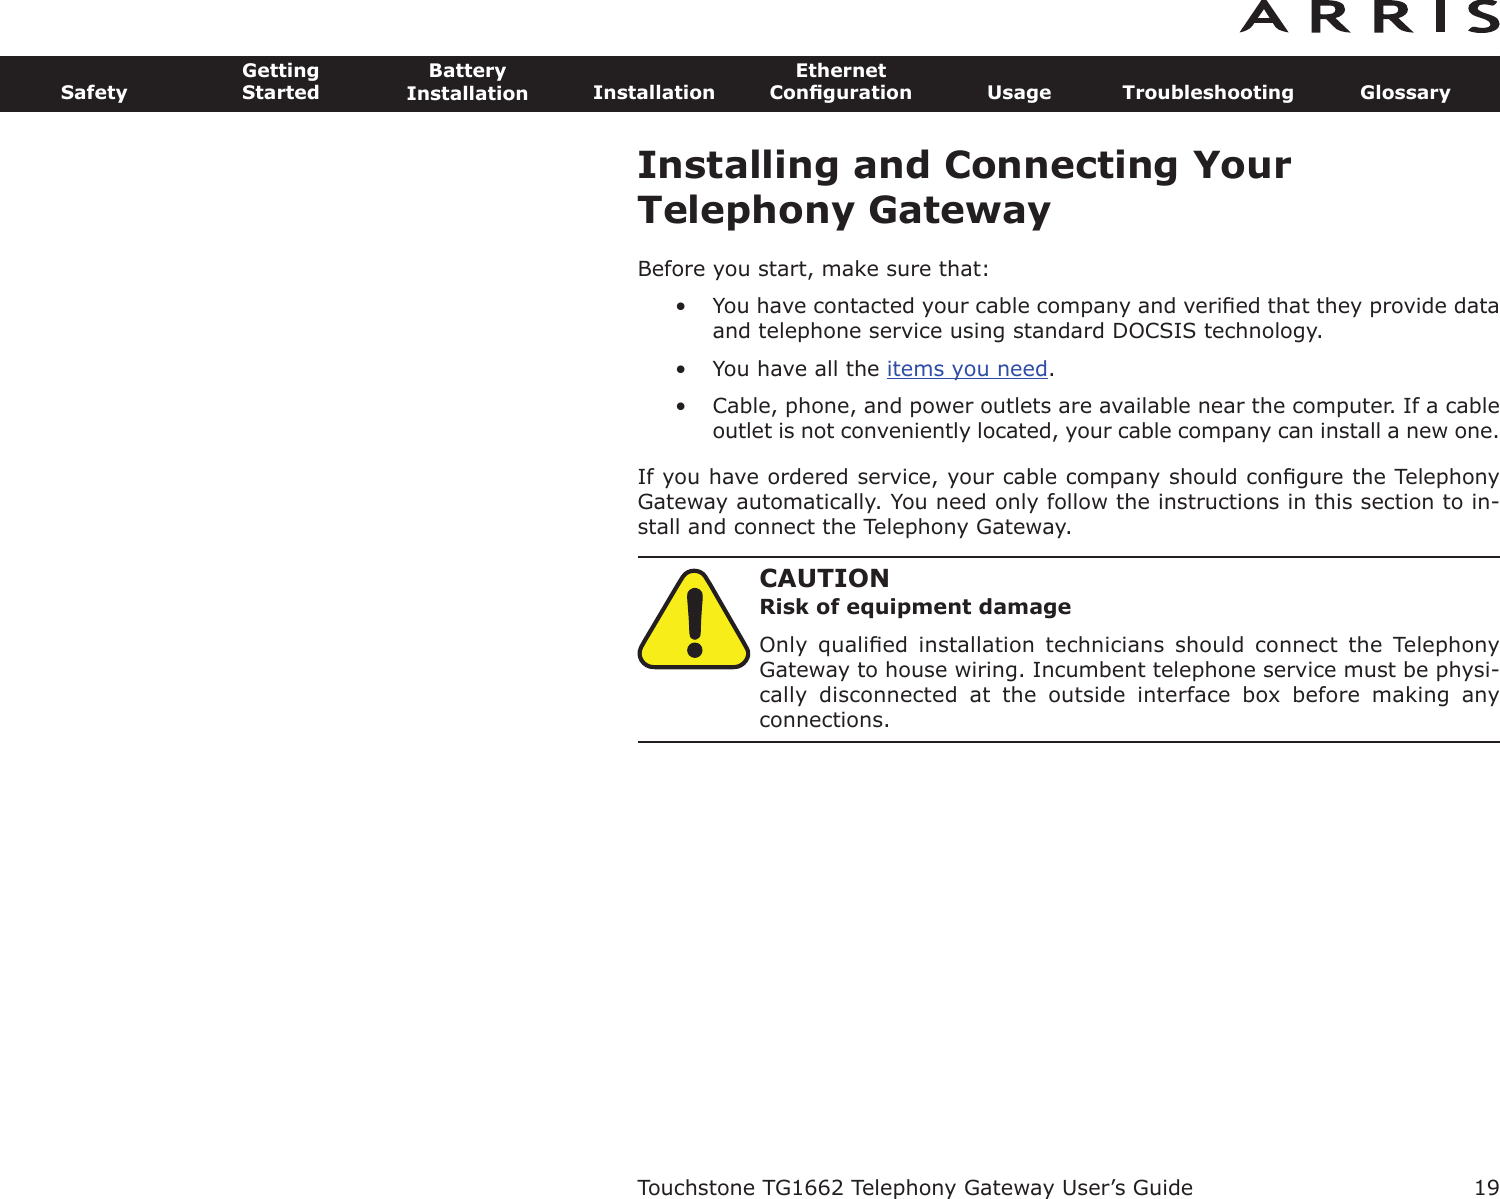 ARRIS TG1672 Touchstone Telephony Gateway User Manual Touchstone TG1662